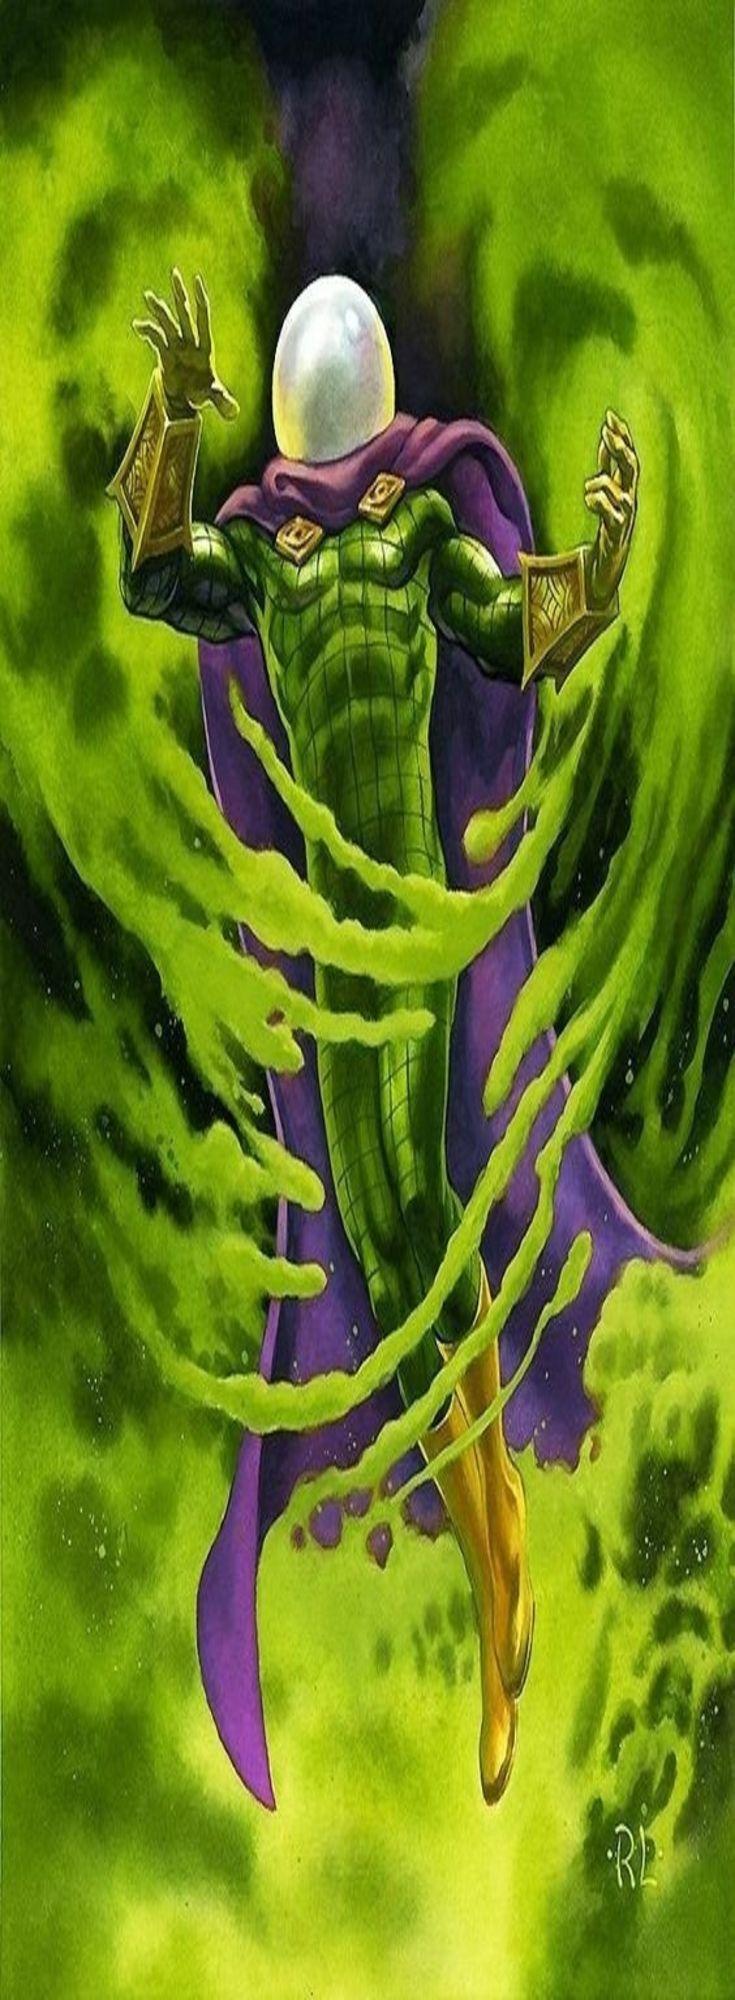 best Marvel, Mysterio image. Marvel heroes